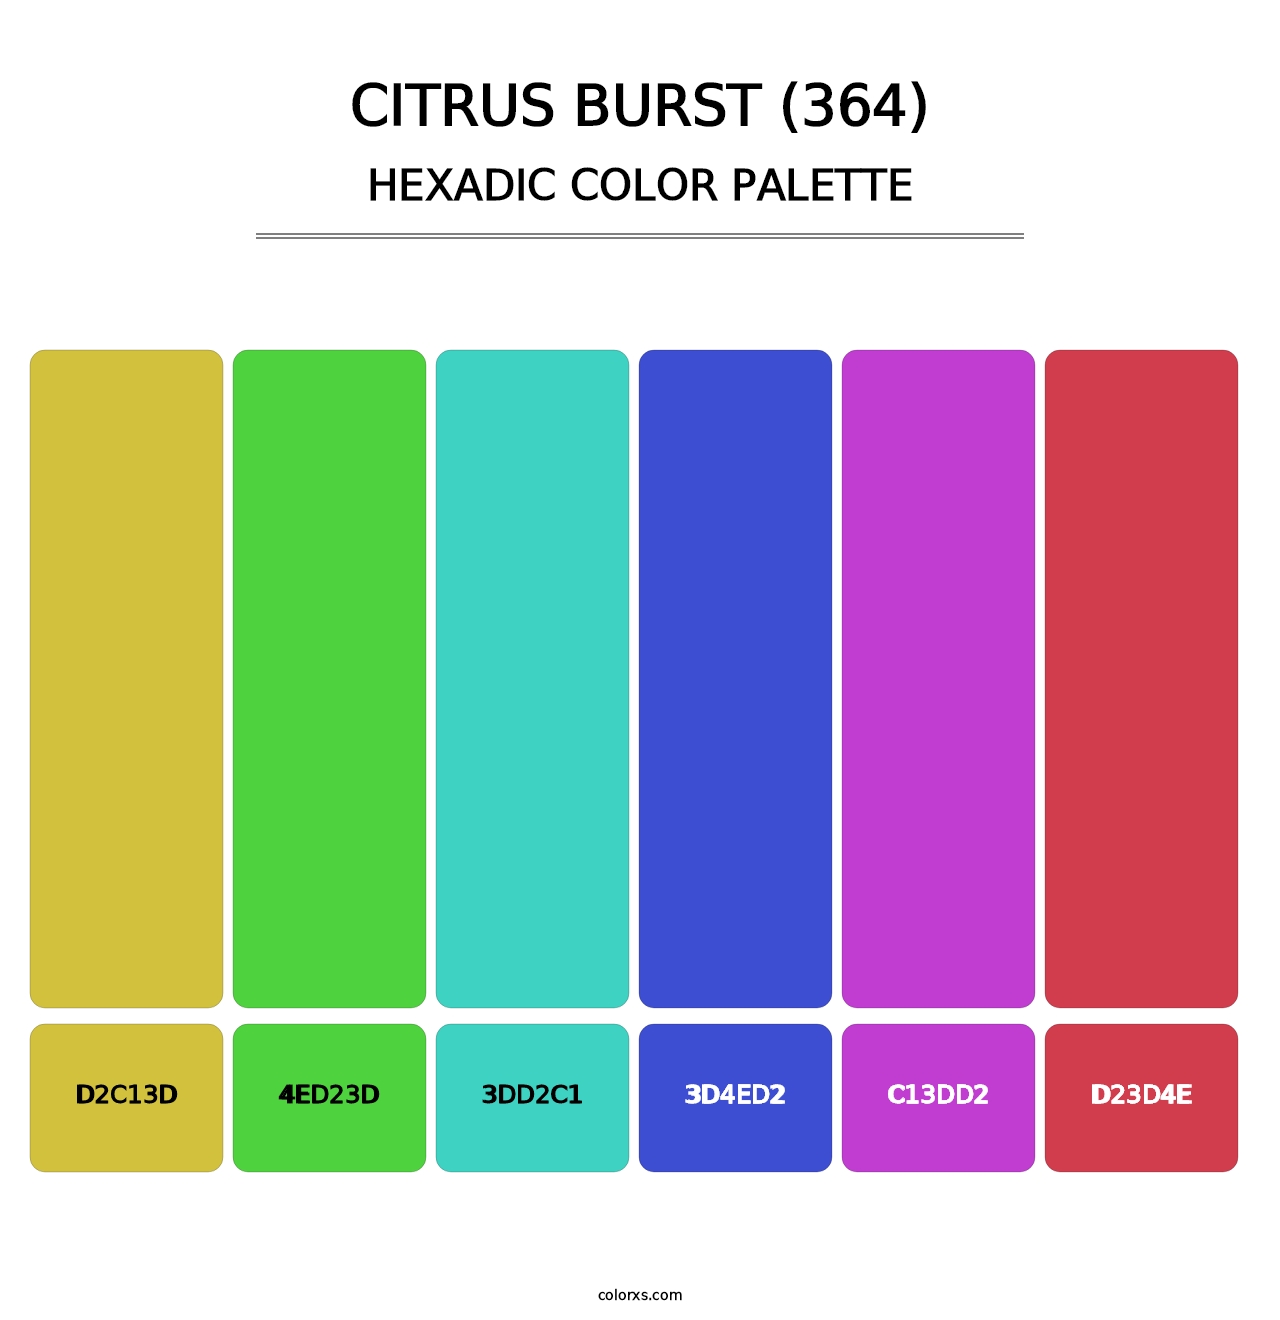 Citrus Burst (364) - Hexadic Color Palette